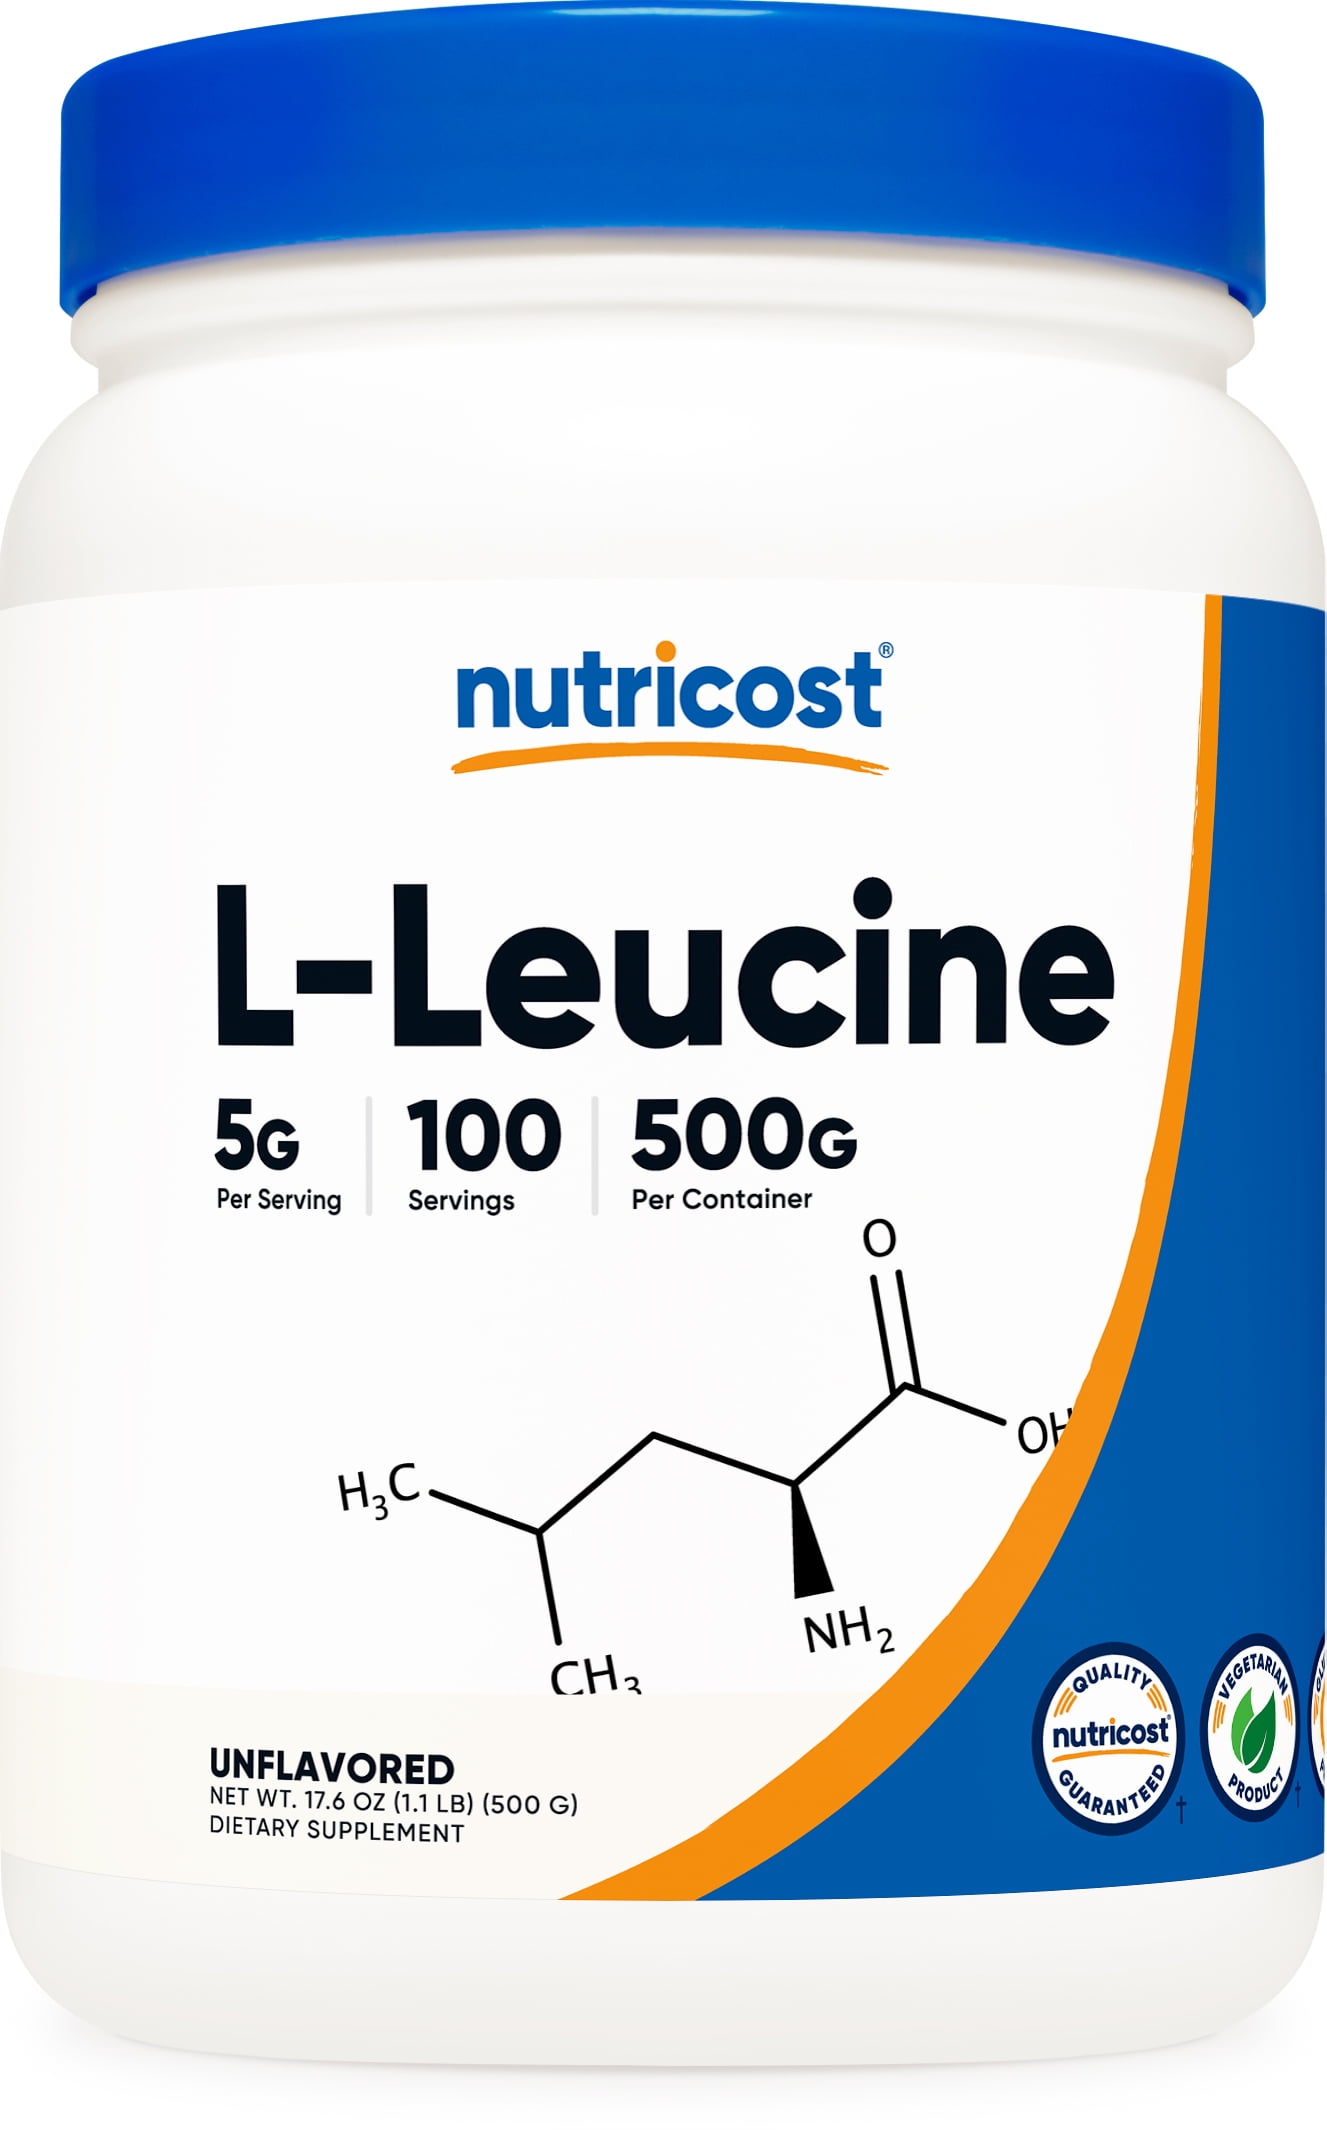 LEUCINE POWDER 300g L-LEUCINE PREMIUM QUALITY BEST VALUE SAMSON NUTRITION